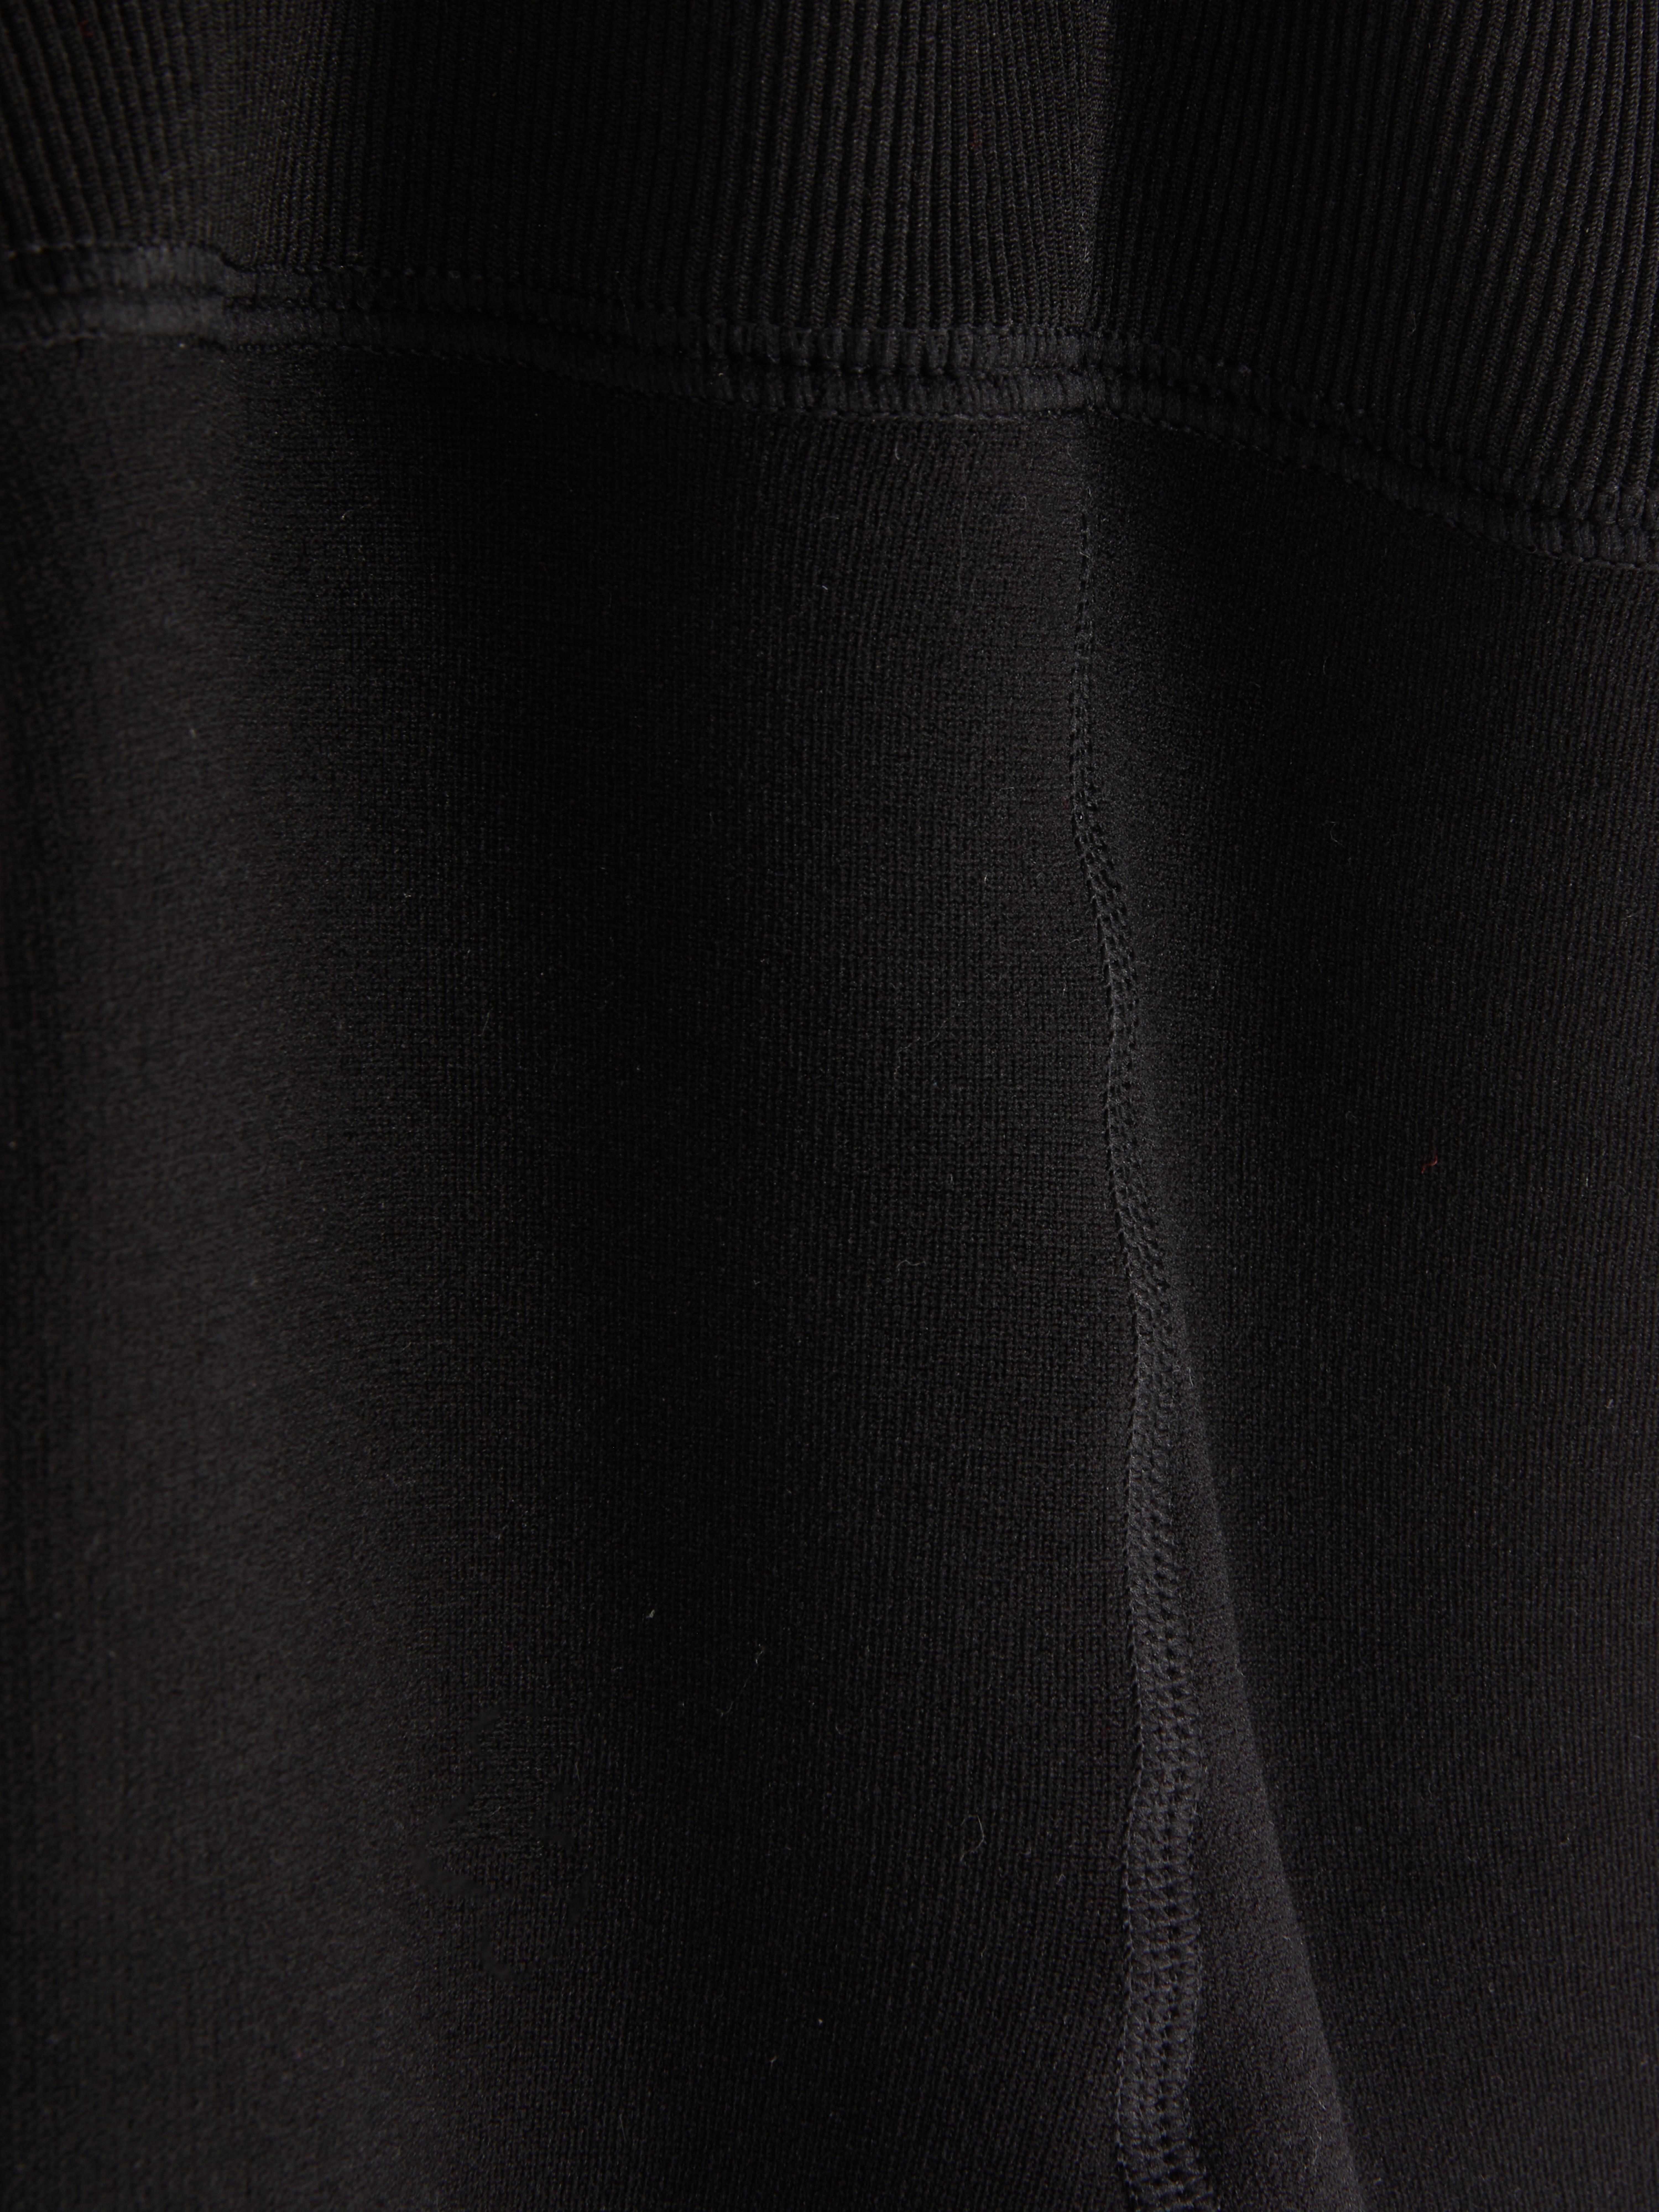 GIRLS PRIMARK FLEECE lined black leggings age 7-8 BNWT £3.99 - PicClick UK